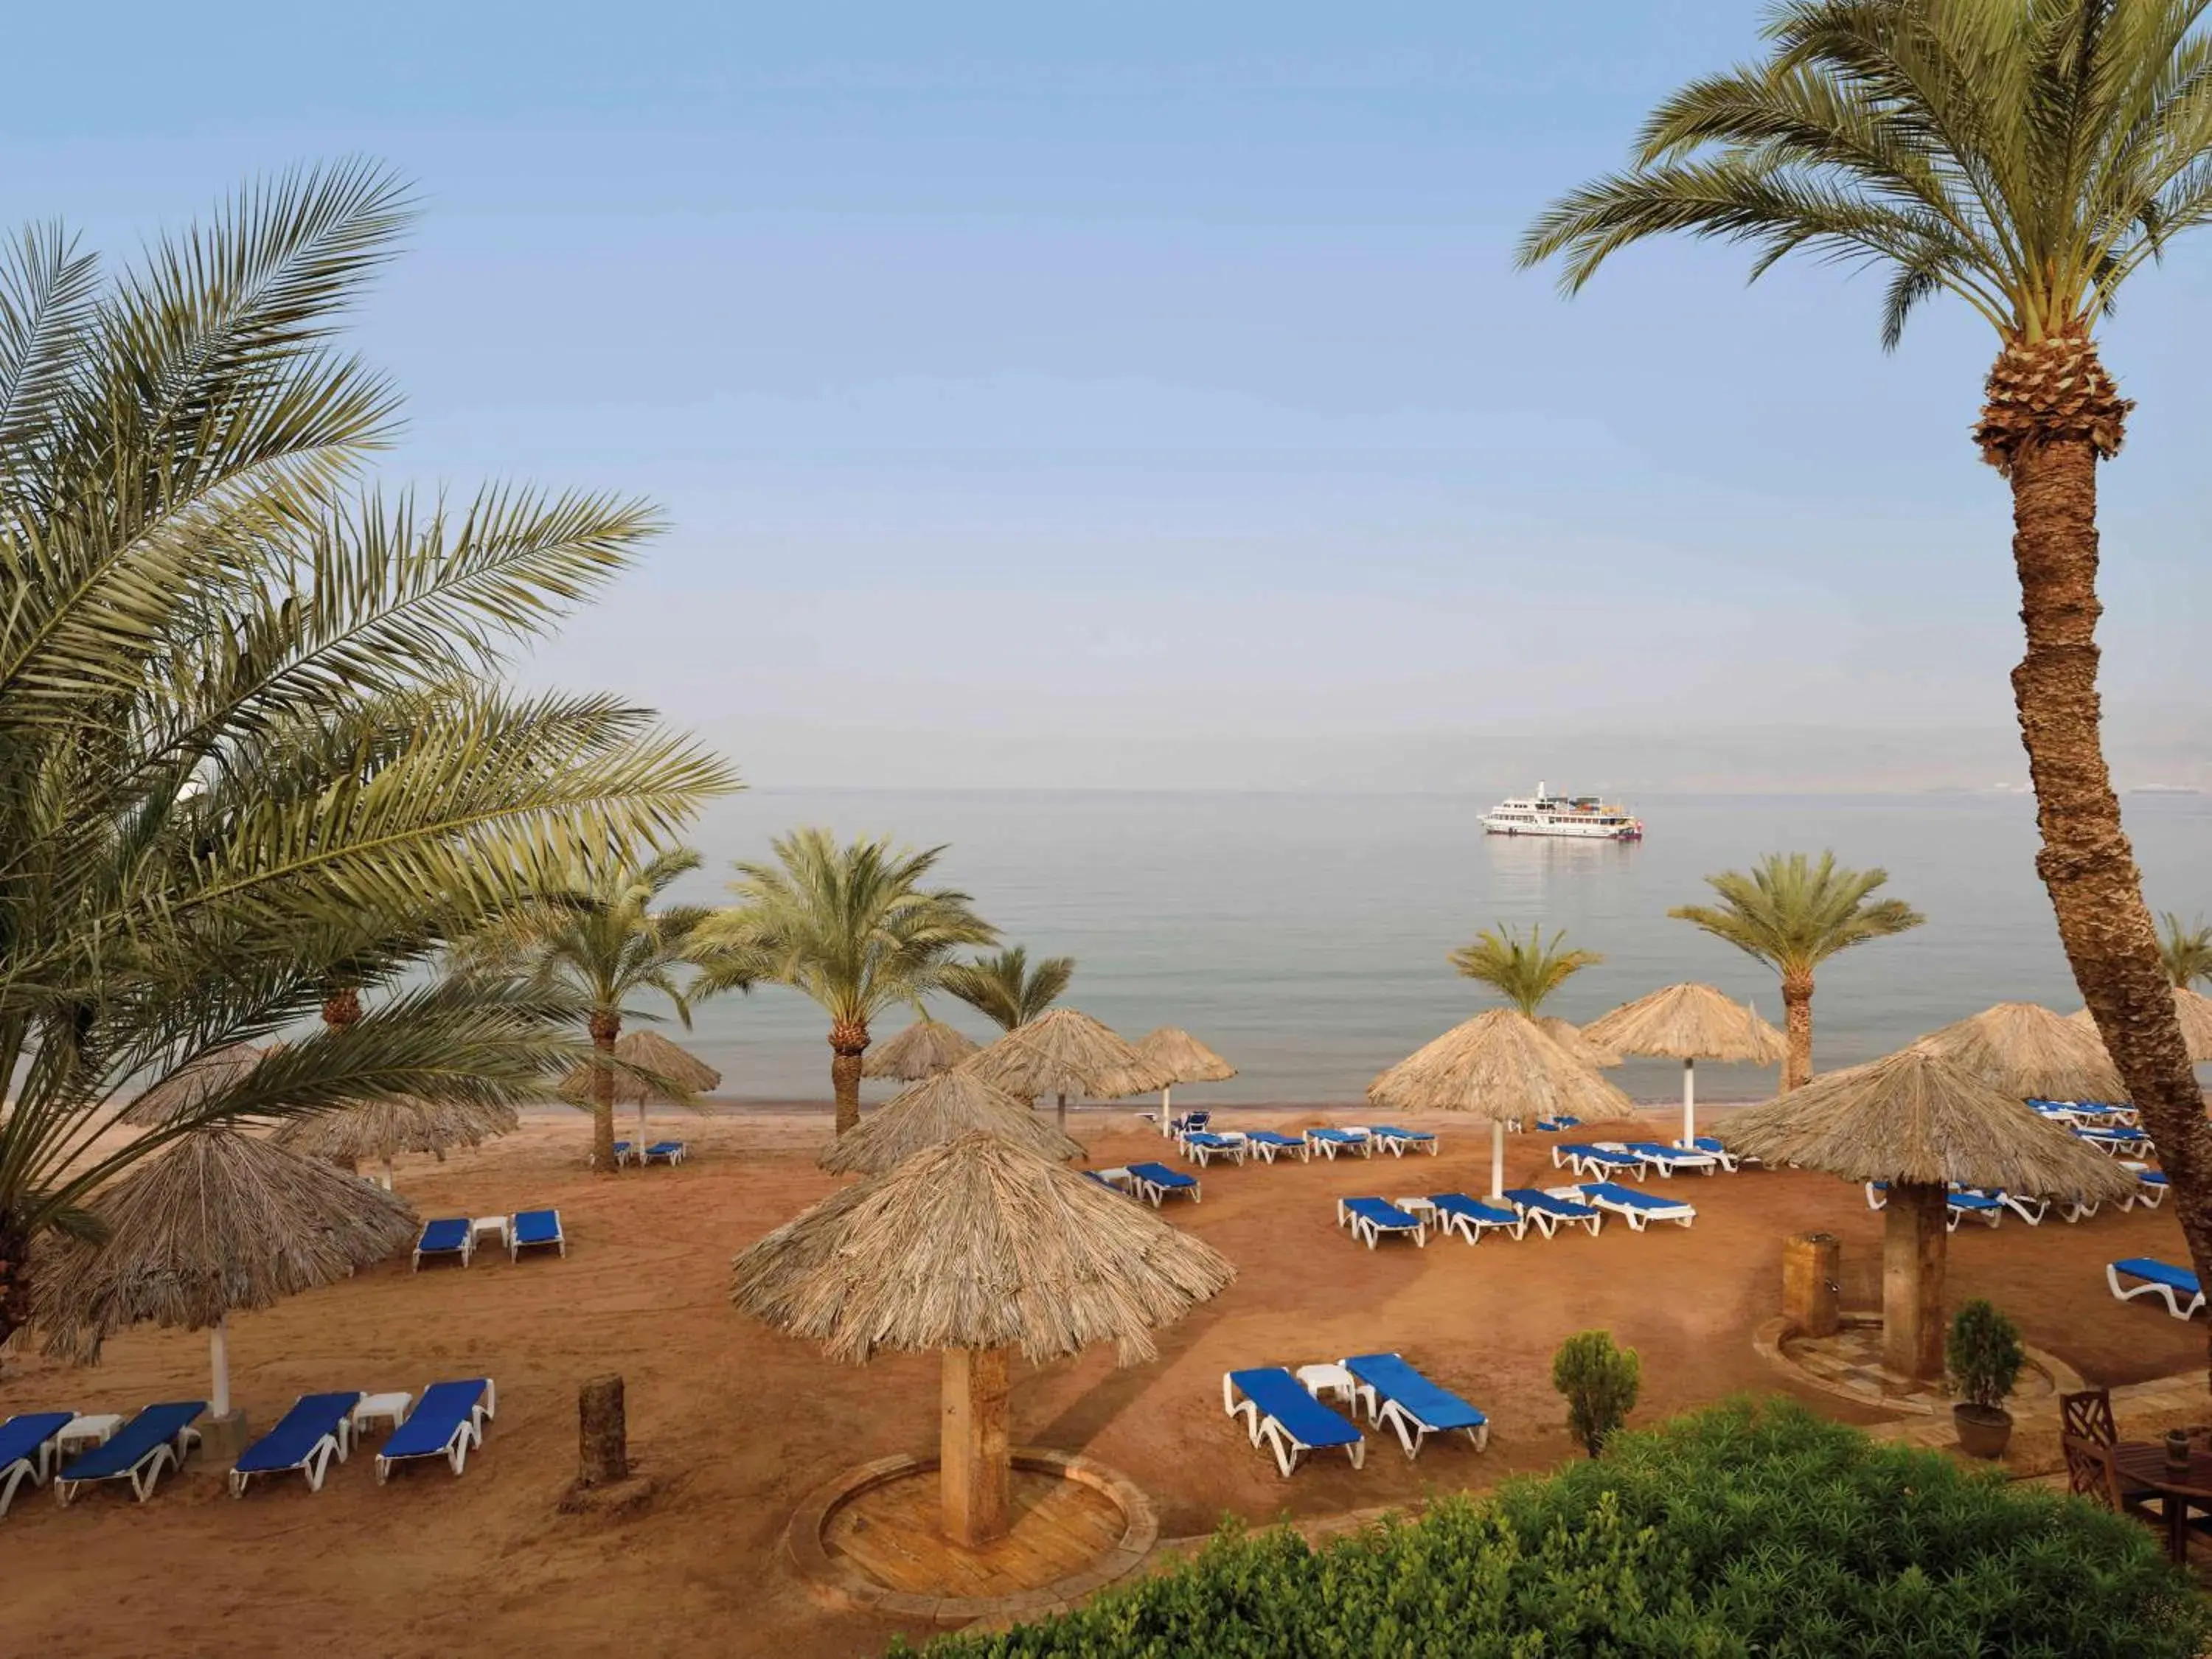 On site in Movenpick Resort & Residences Aqaba